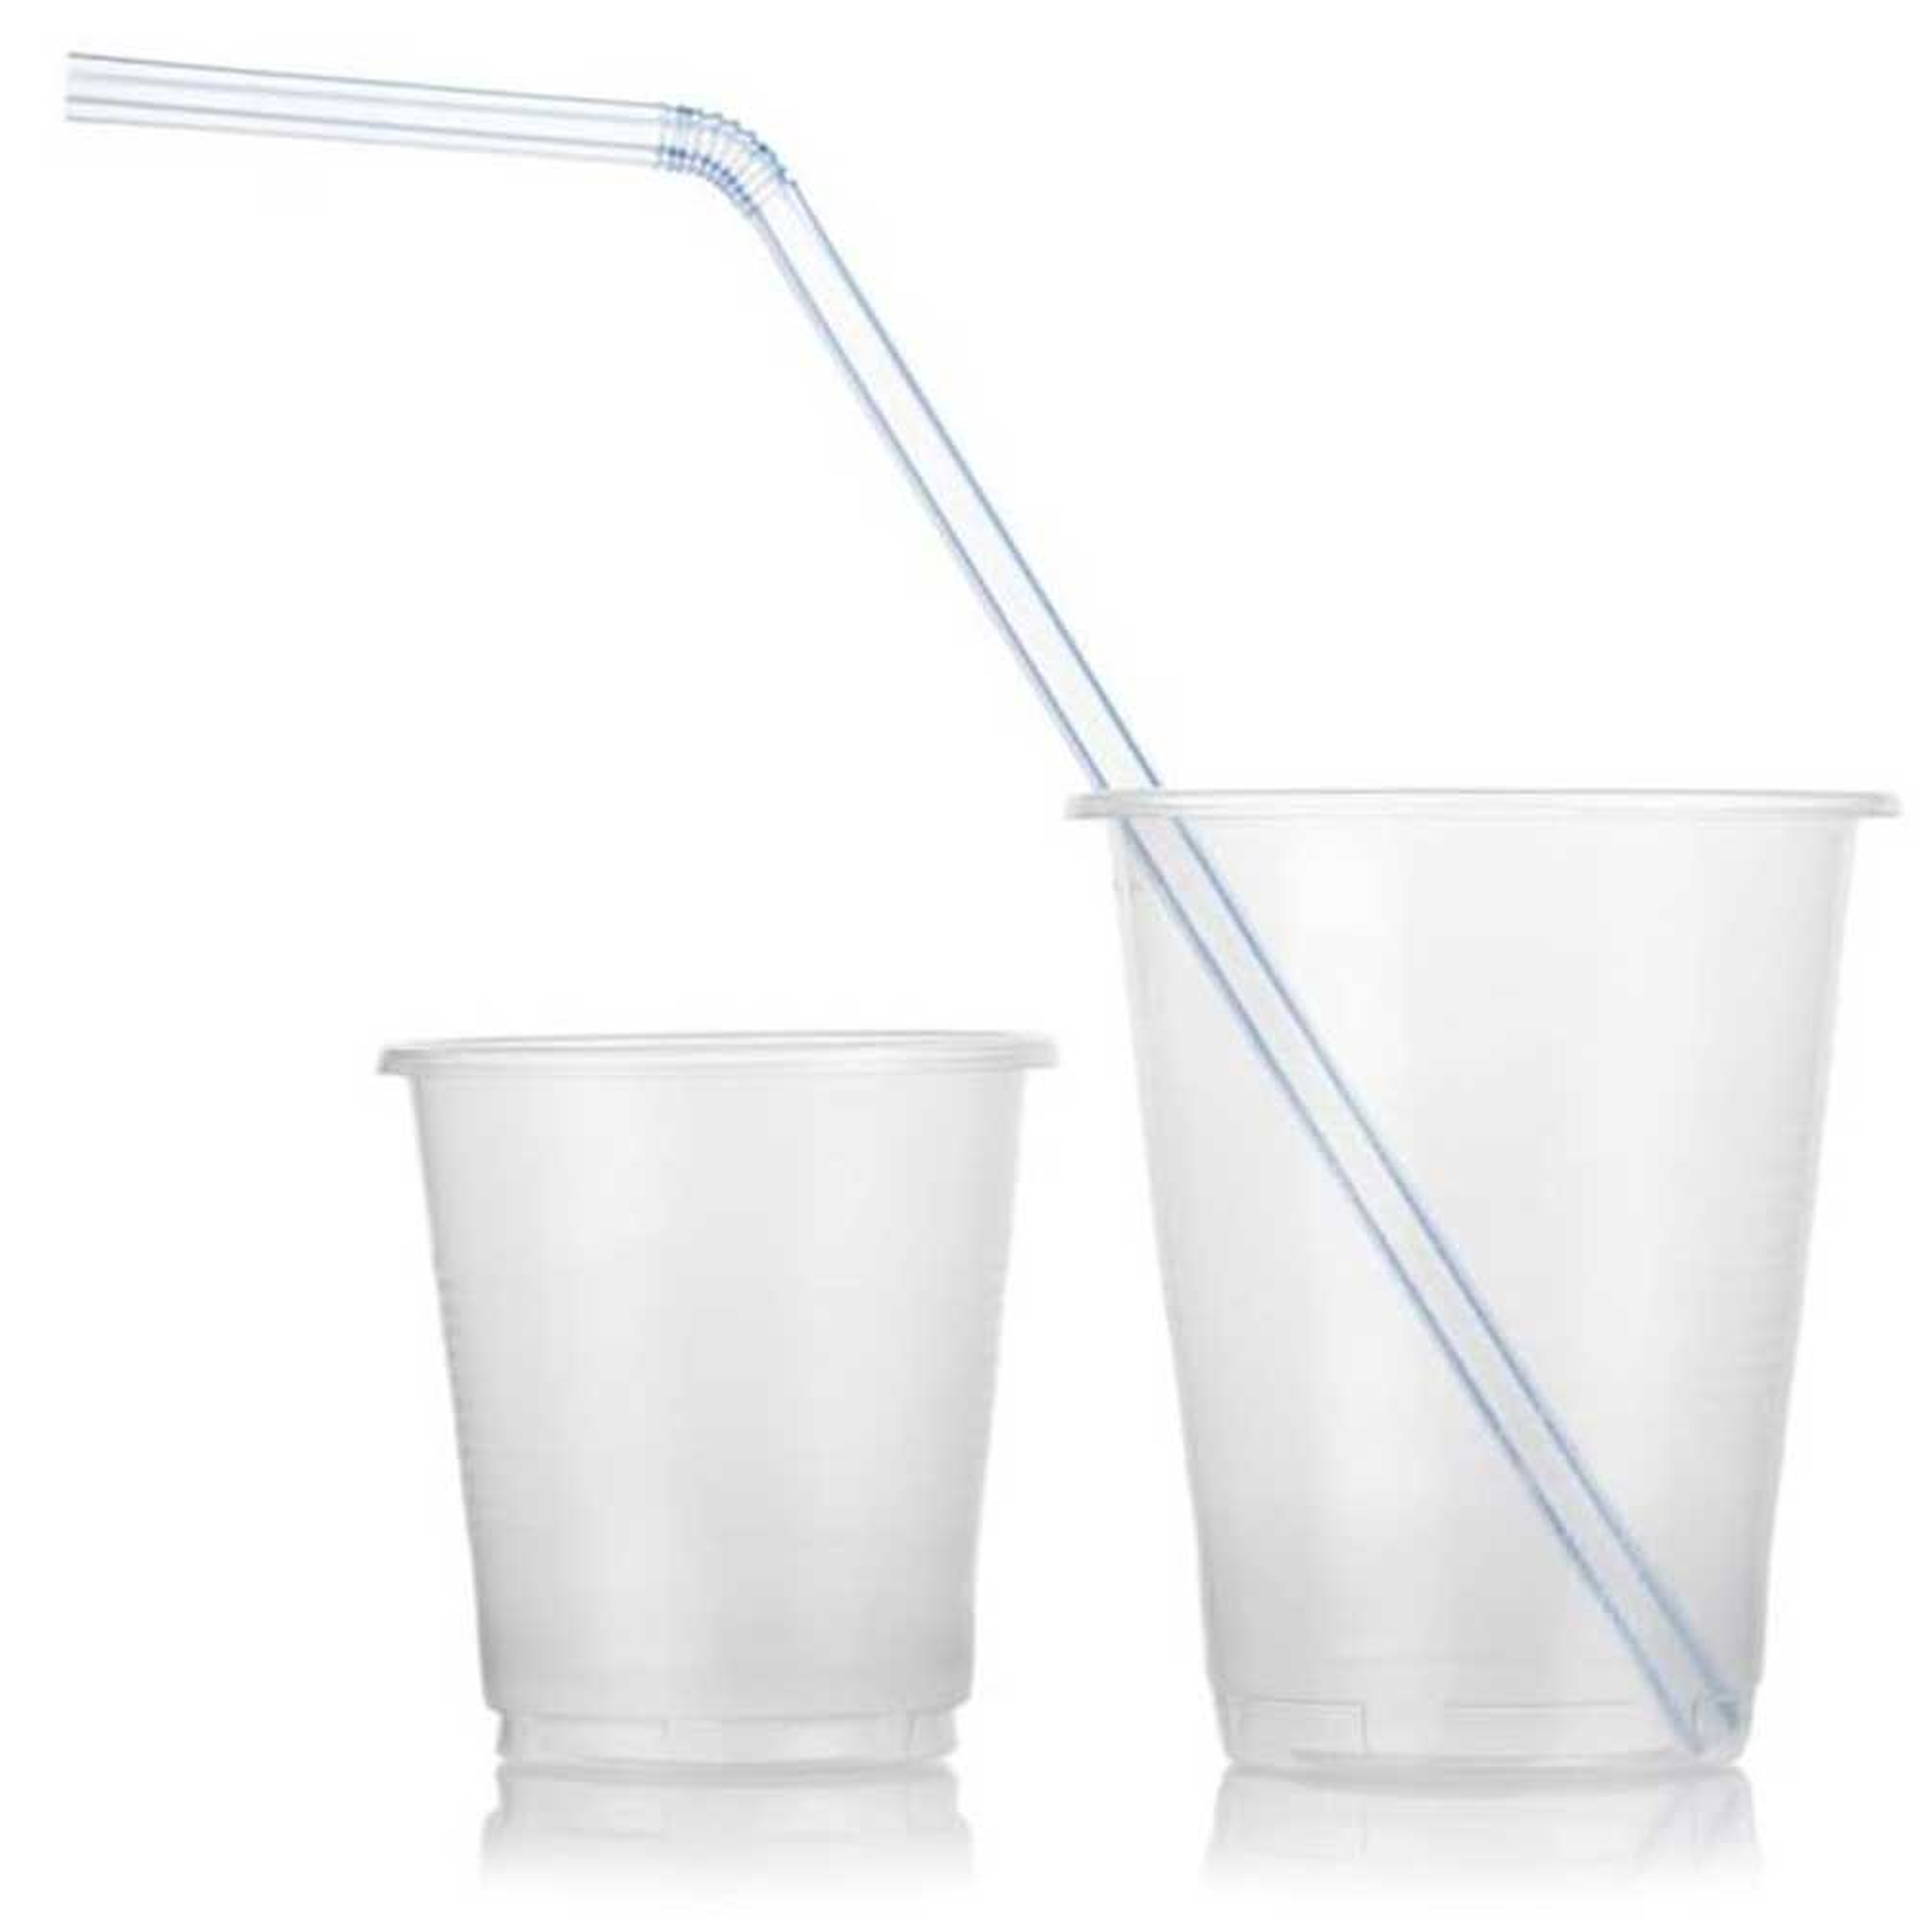 PVC slamčice i čaše